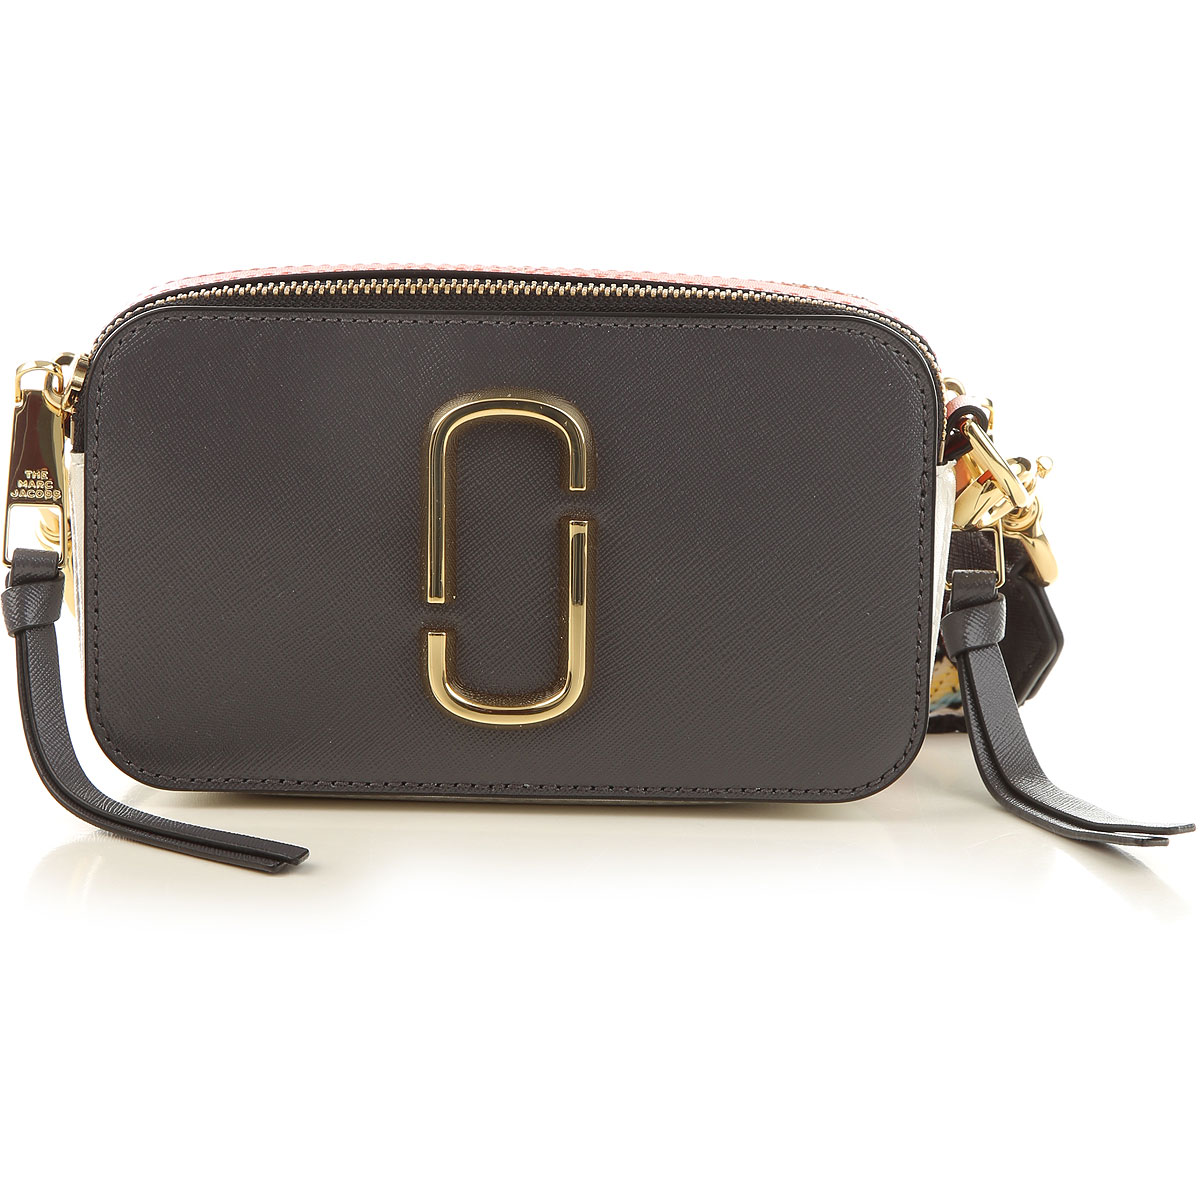 Handbags Marc Jacobs, Style code: m0012007-024-